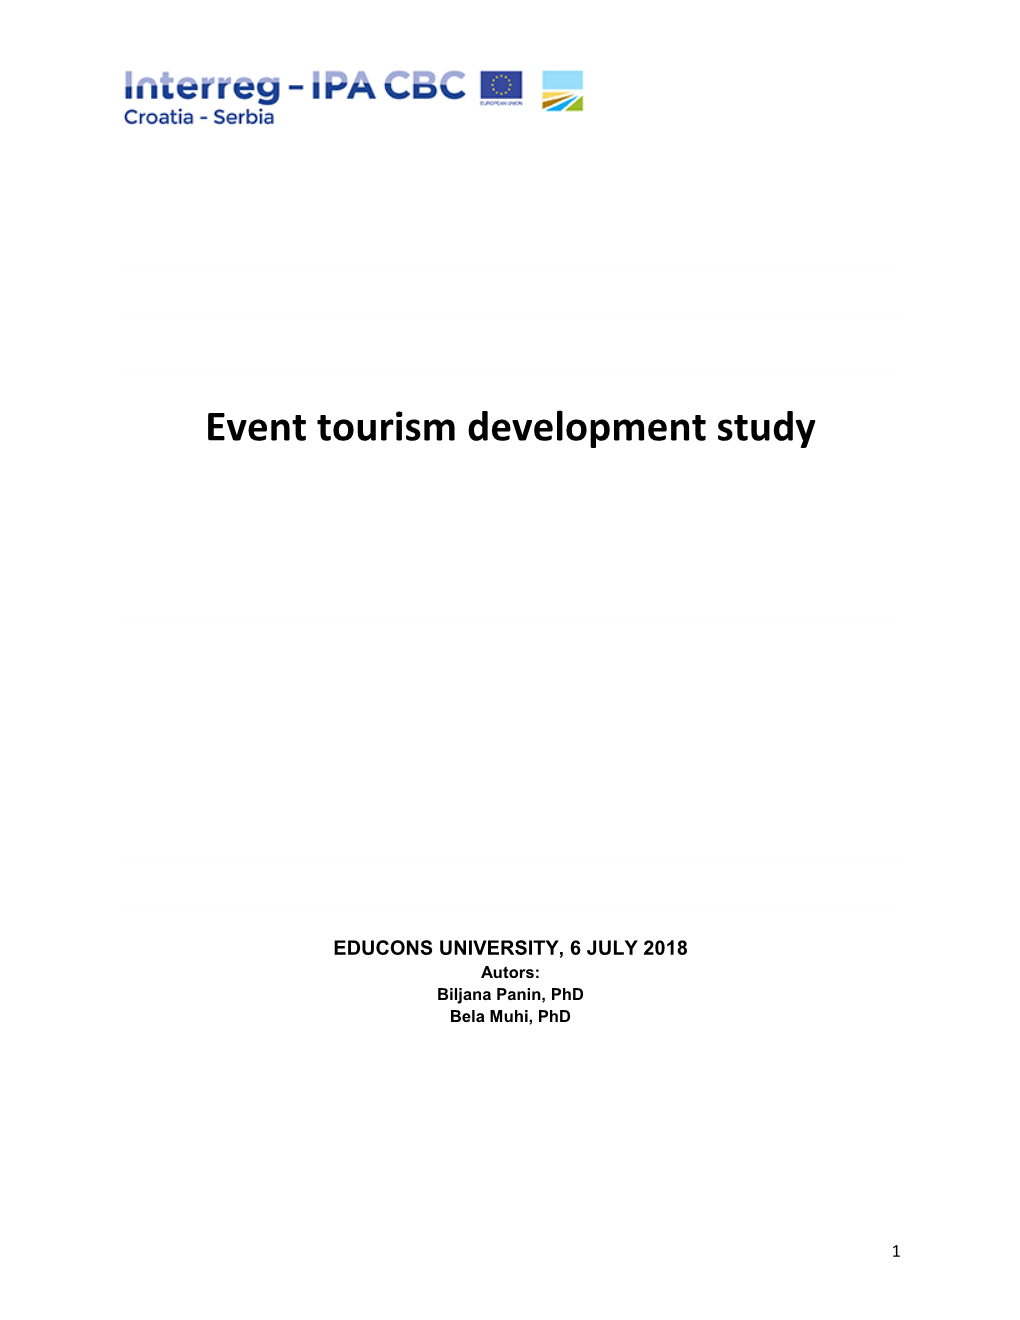 Event Tourism Development Study